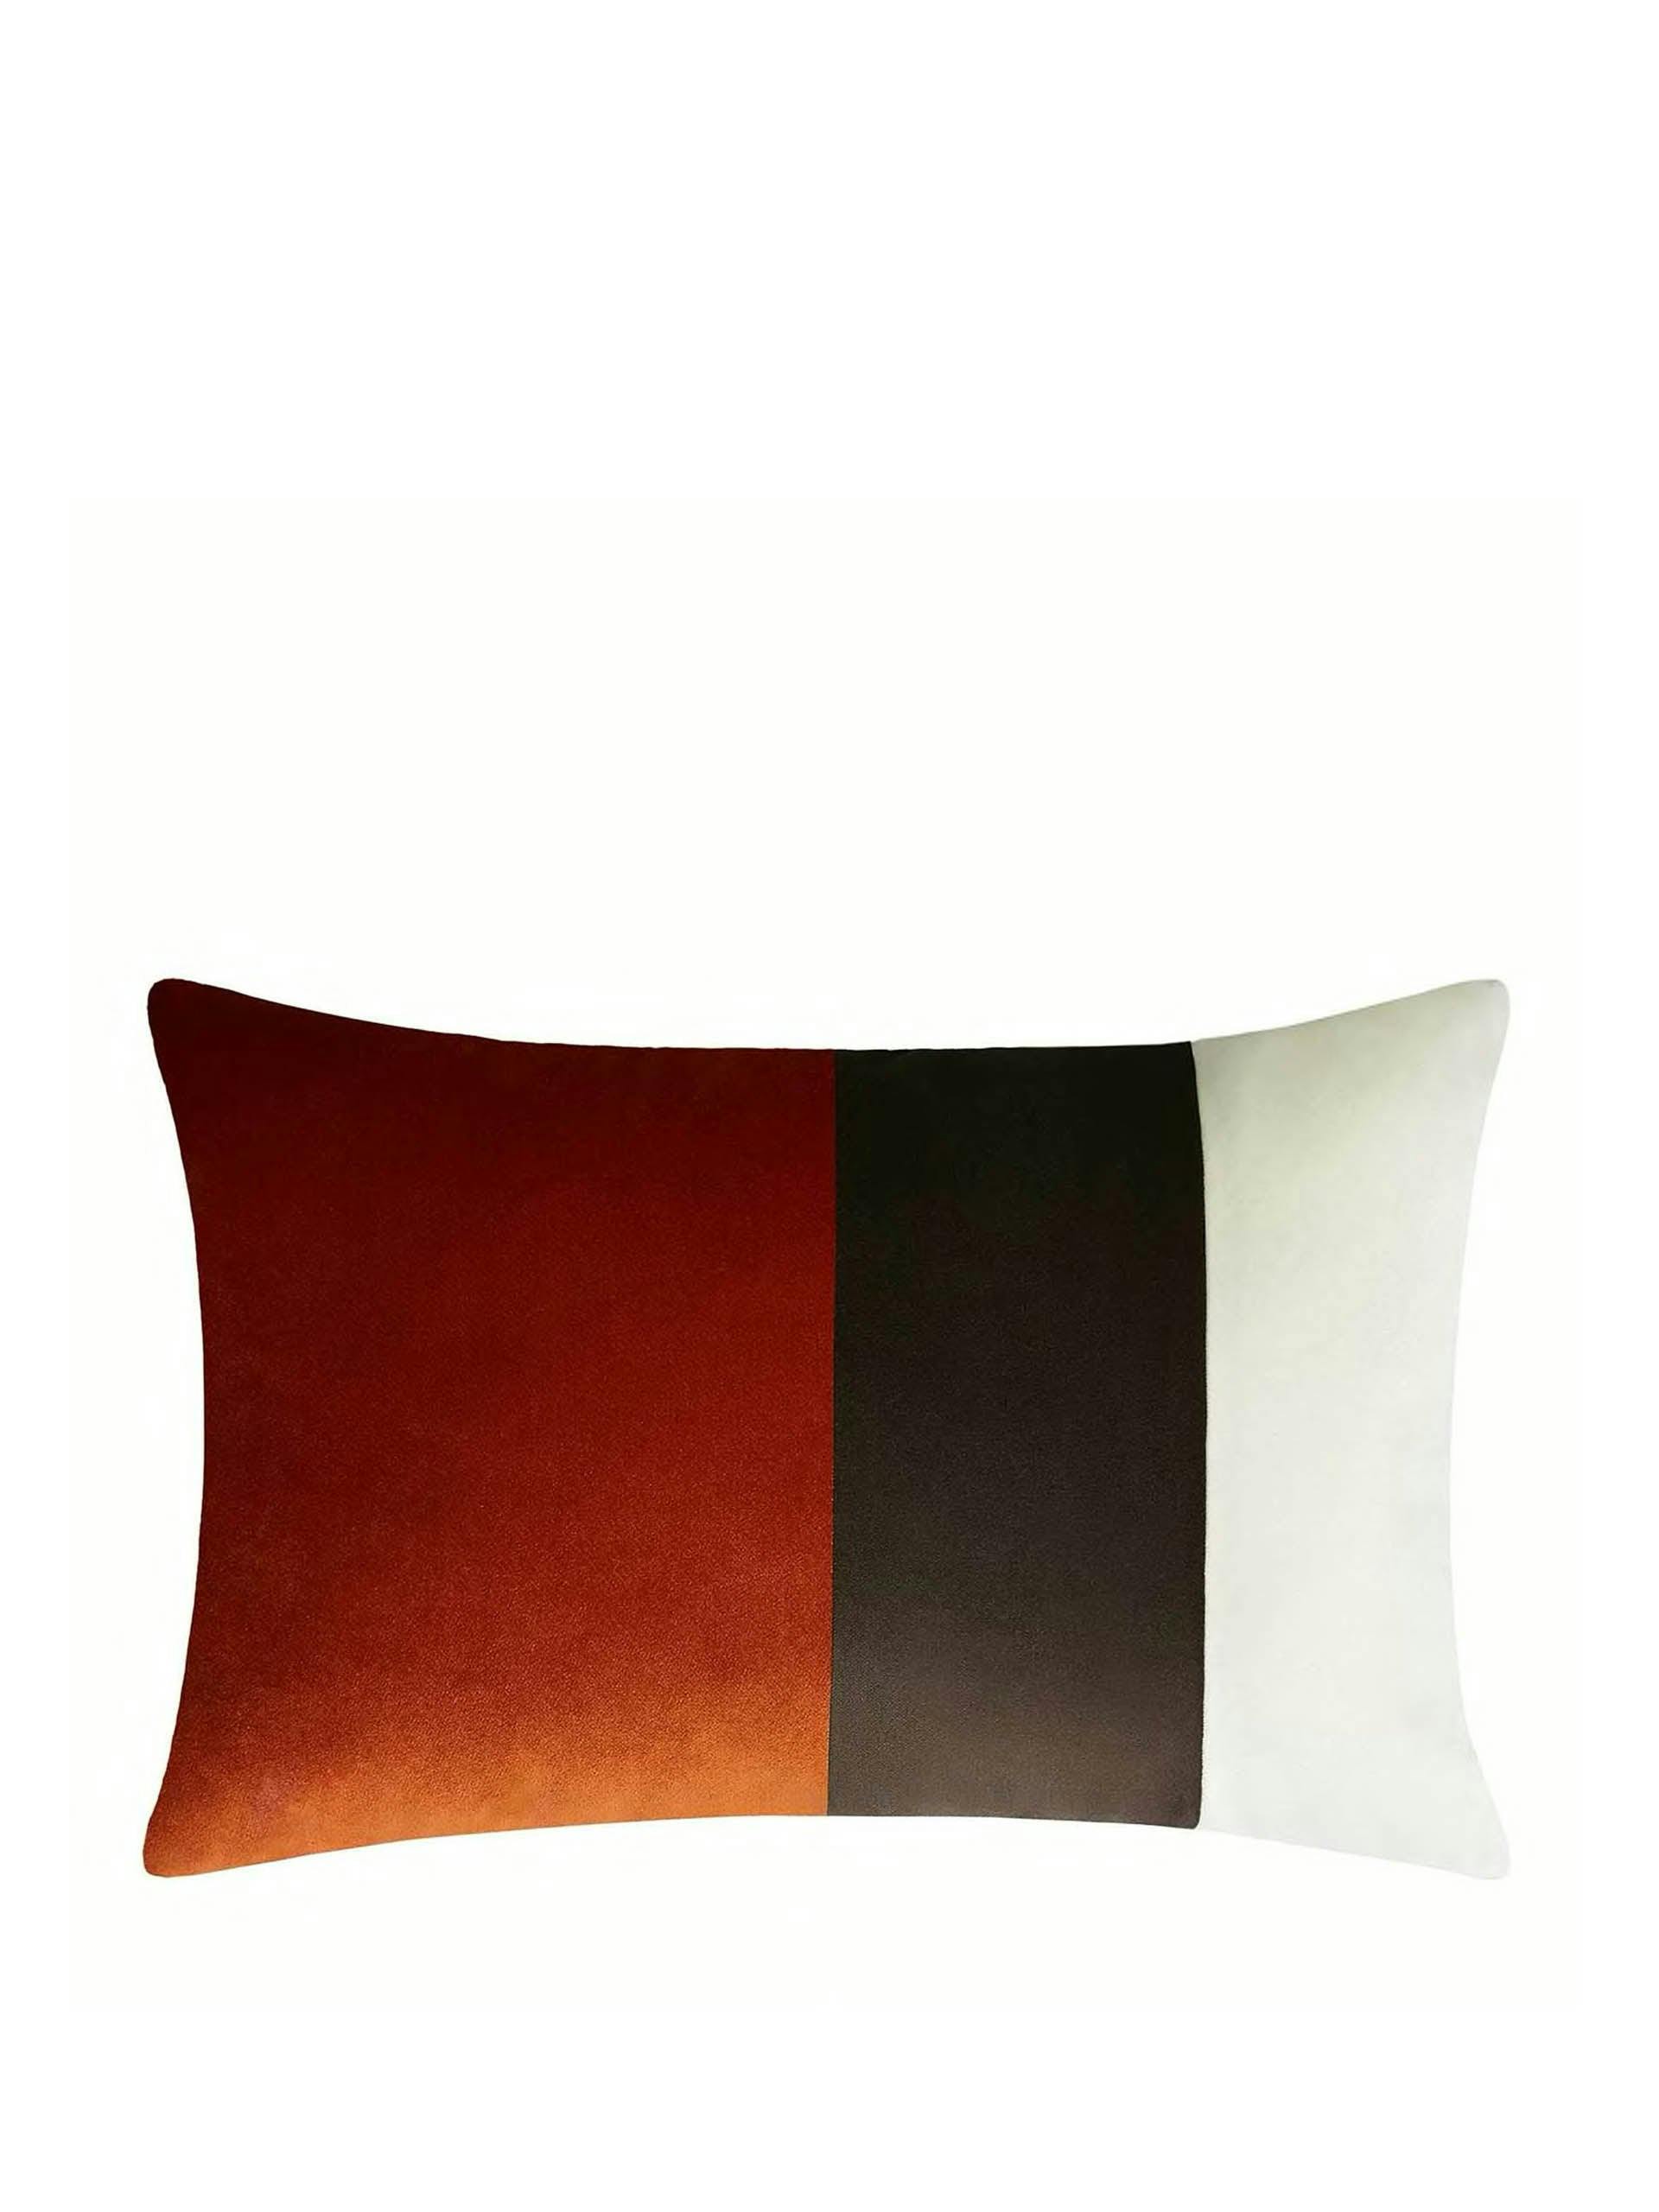 Triple black, white and brick red cushion